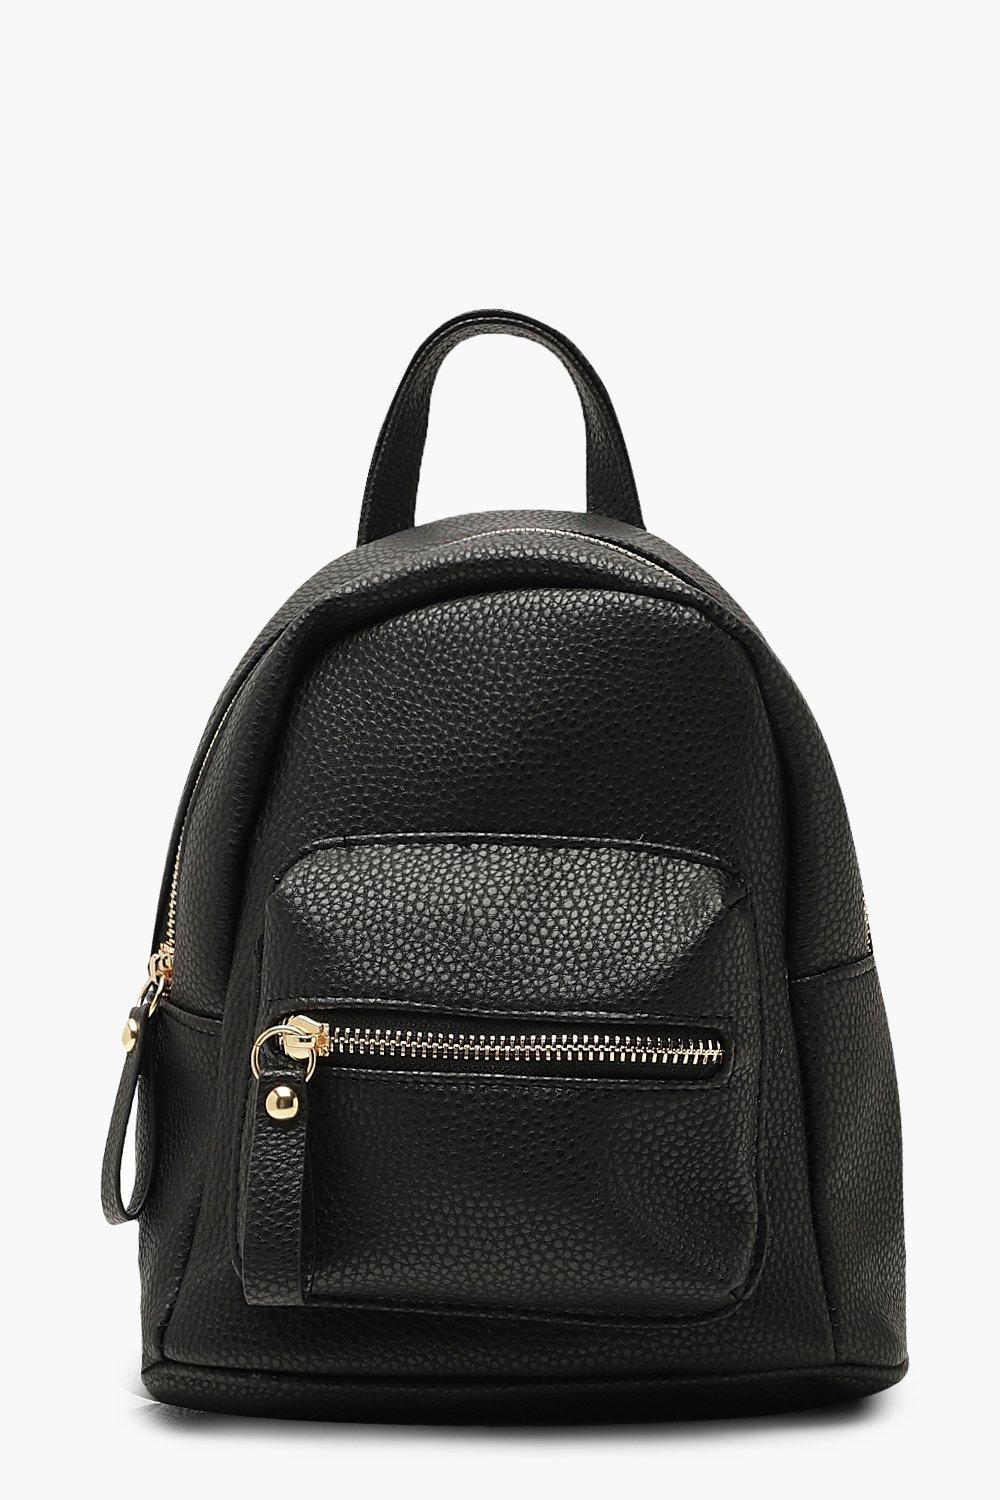 Womens Grainy Mini Rucksack Bag - Black - One Size, Black